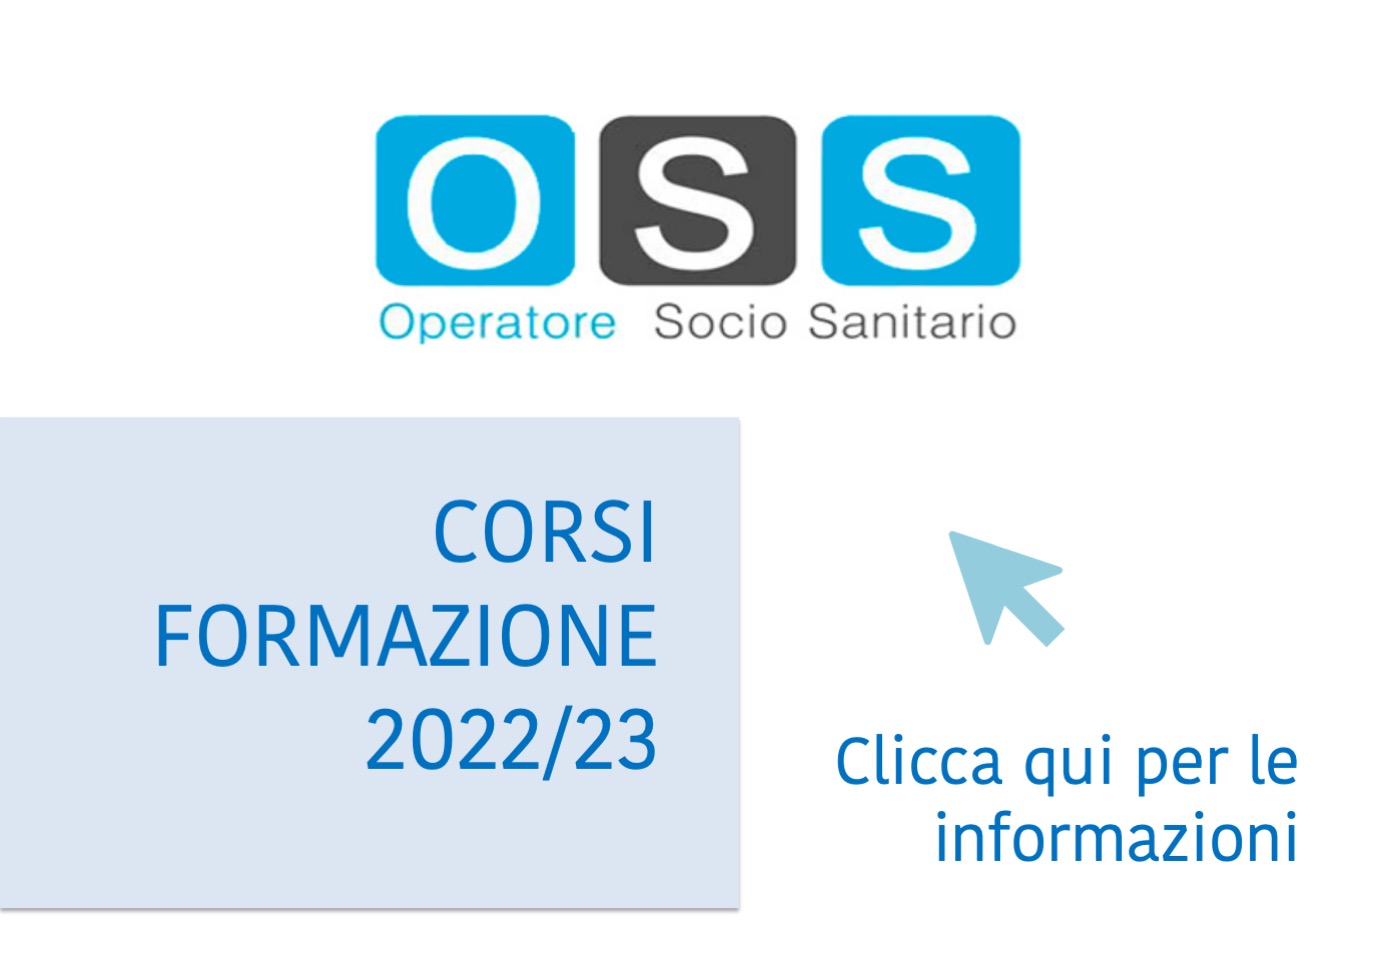 Corsi OSS 2022/23